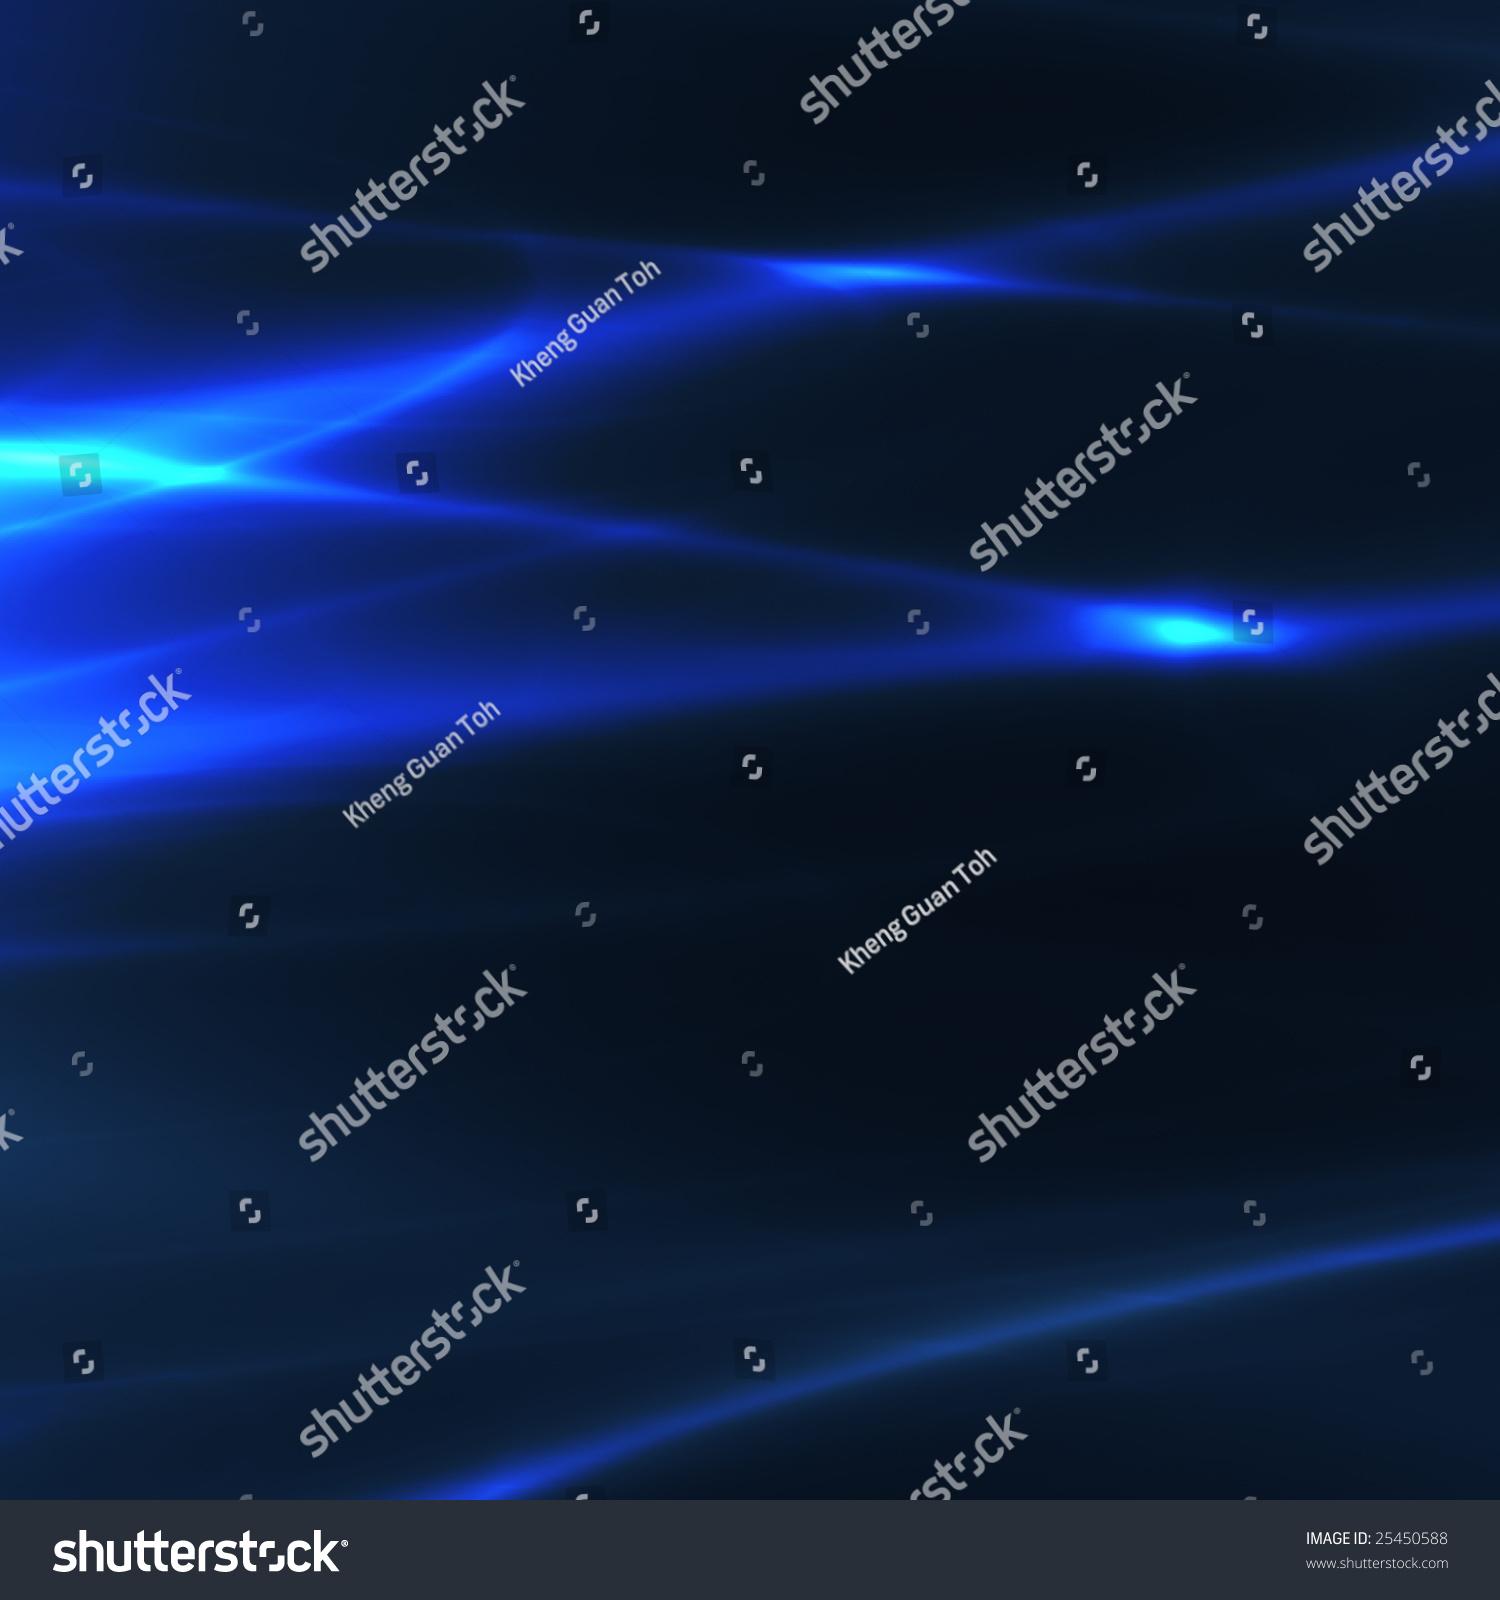 Abstract wallpaper illustration of glowing wavy streaks of light #25450588